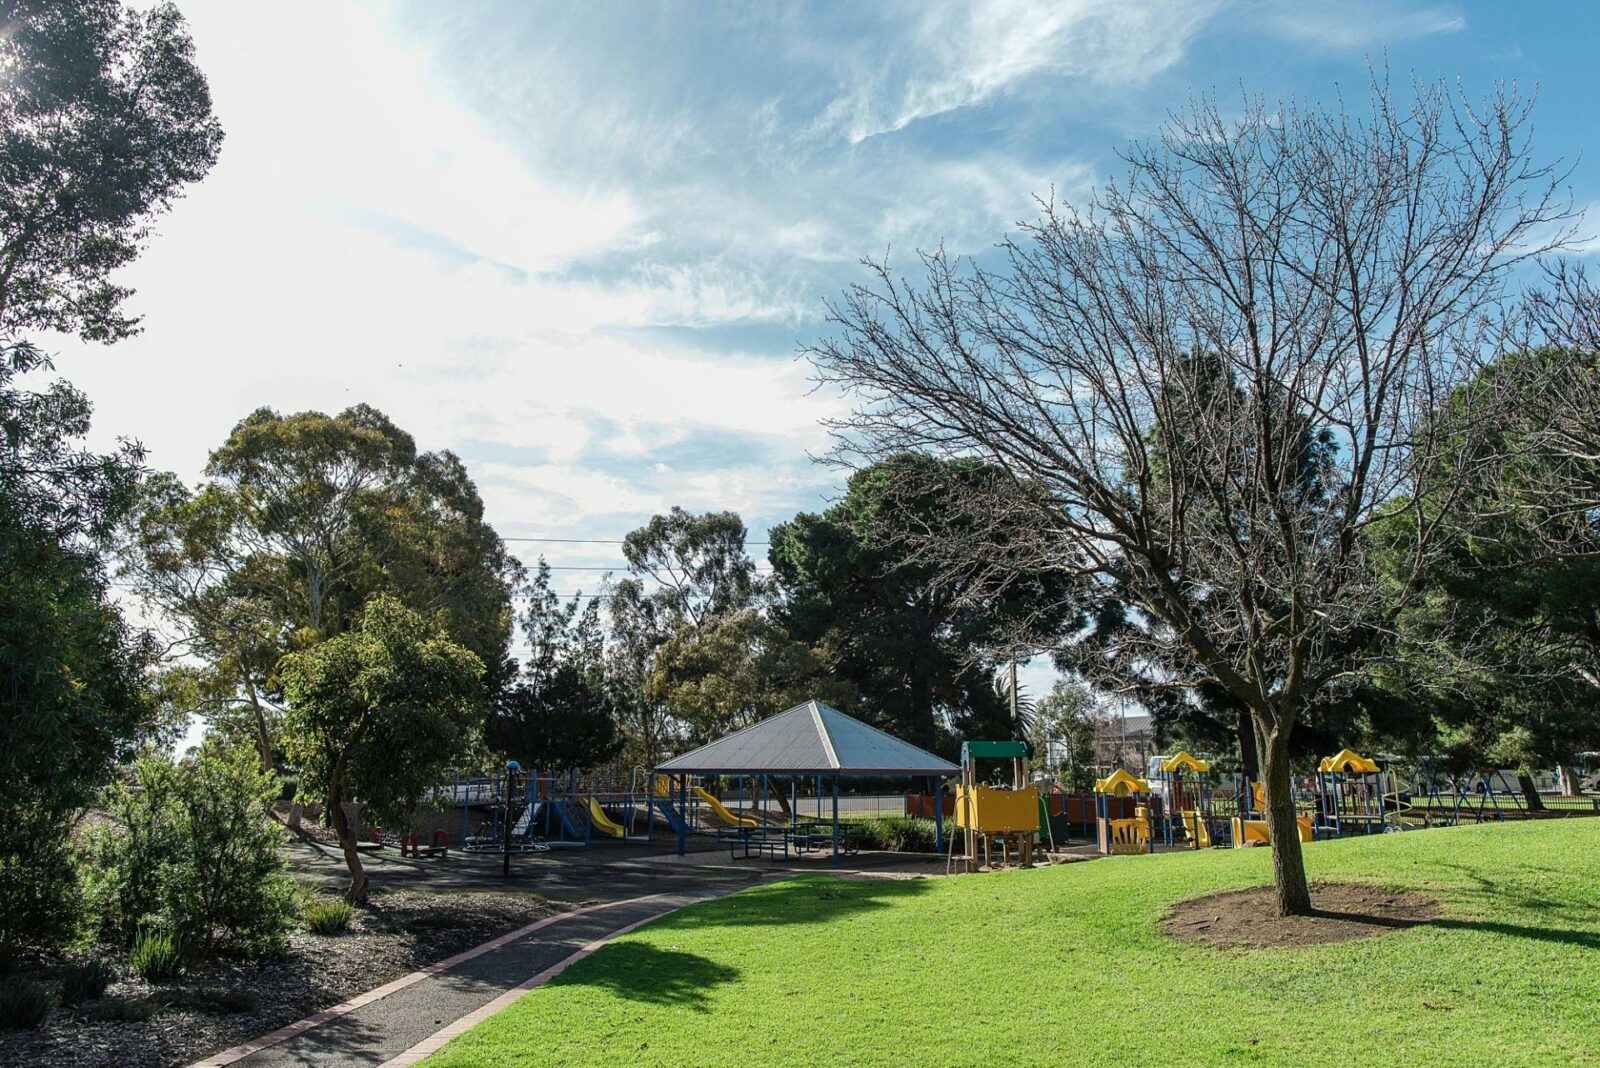 denise-norton-park-playground